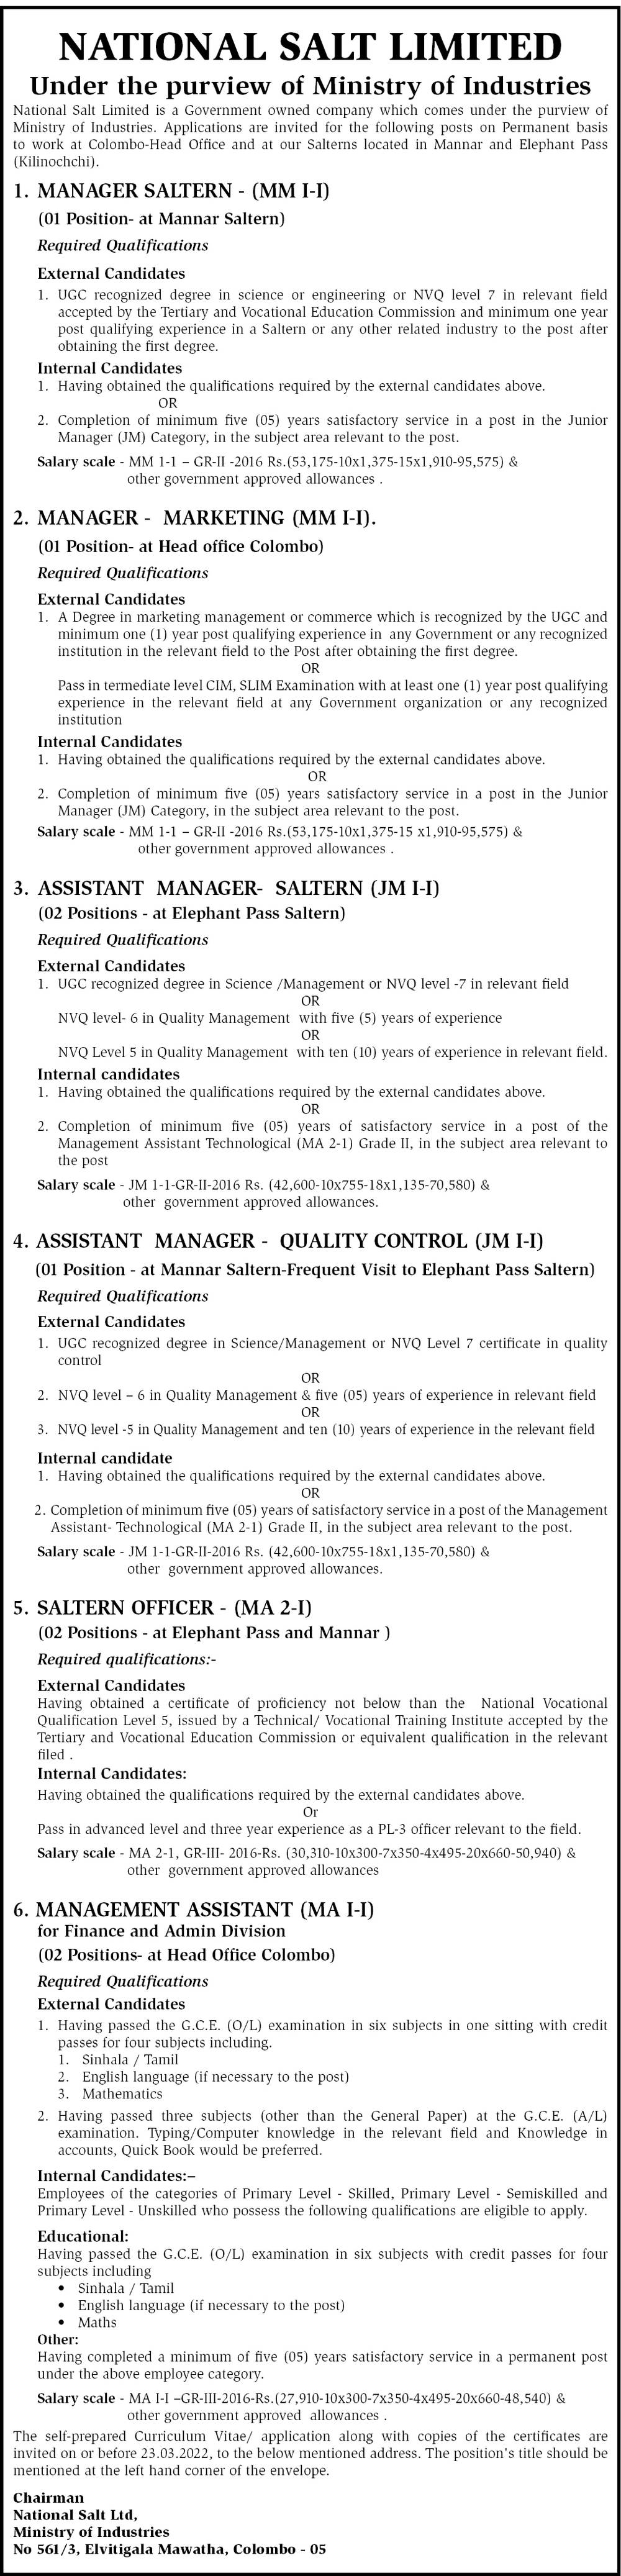 Management Assistant / Saltern Officer / Assistant Manager (Quality Control Saltern) / Manager (Marketing Saltern) - National Salt Limited